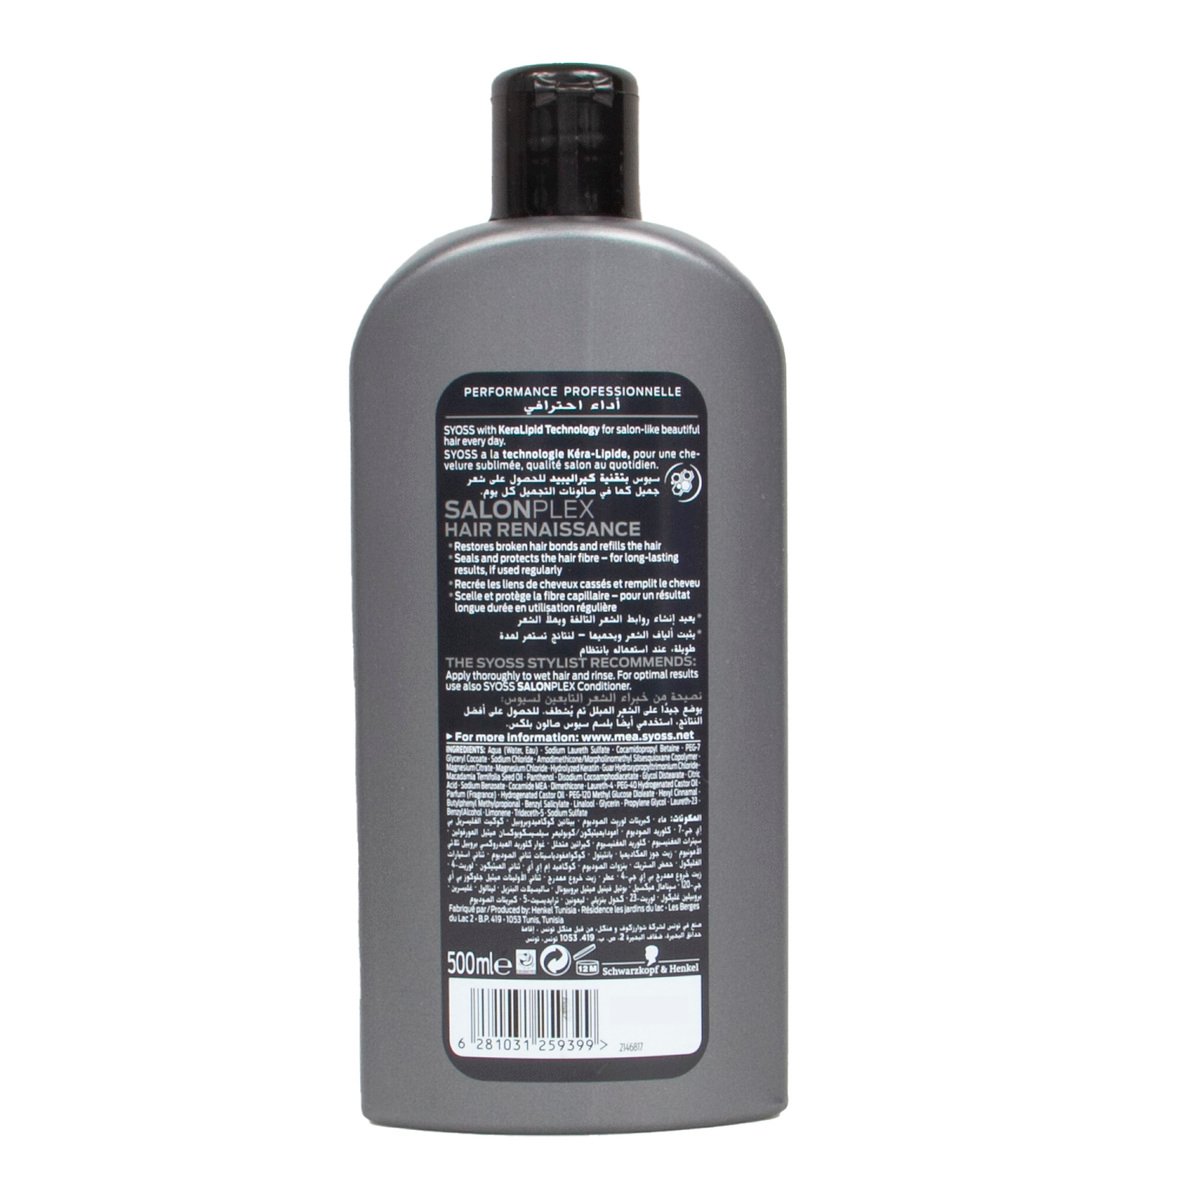 Syoss Salonplex Hair Renaissance Shampoo, 500 ml